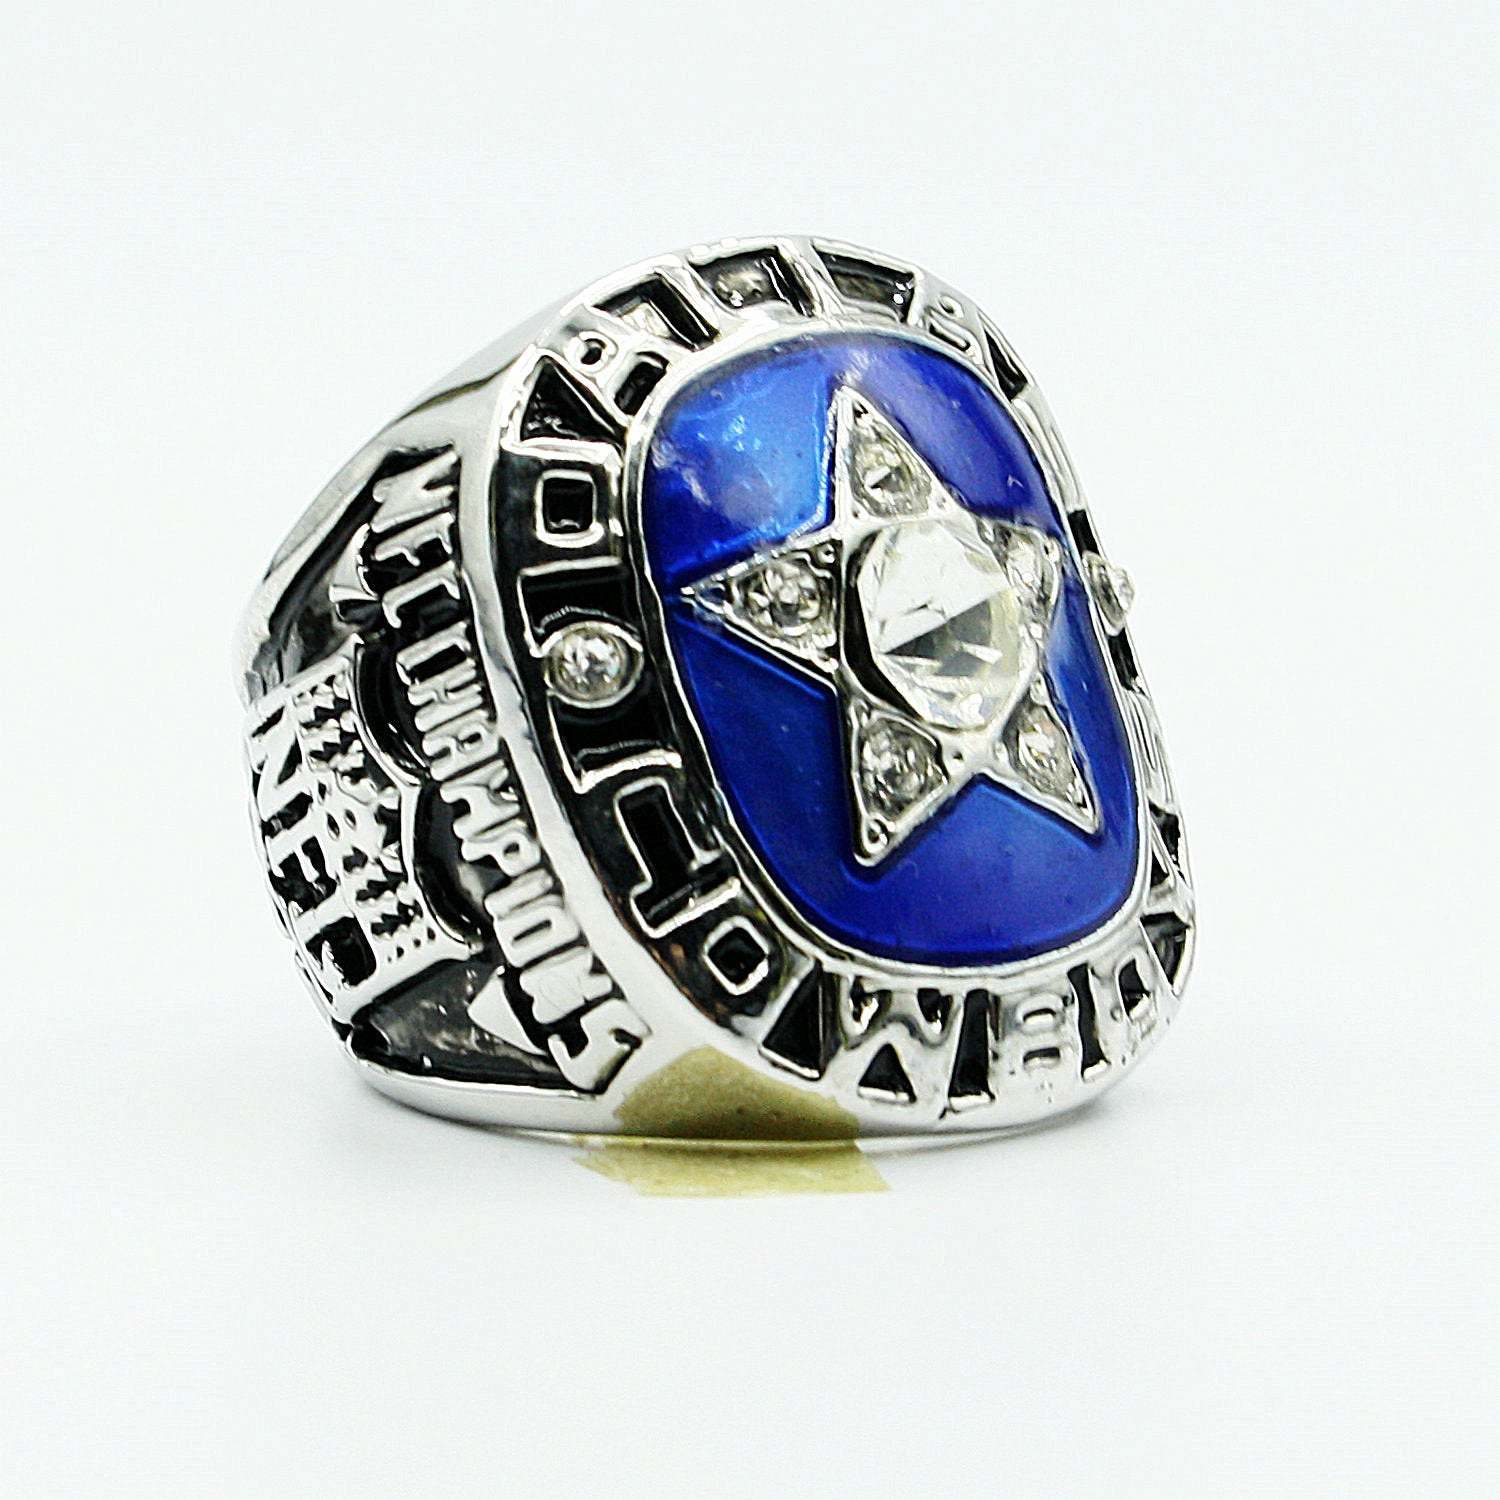 Primary image for NFL Silver 1970 Dallas Cowboys Championship Ring Replica